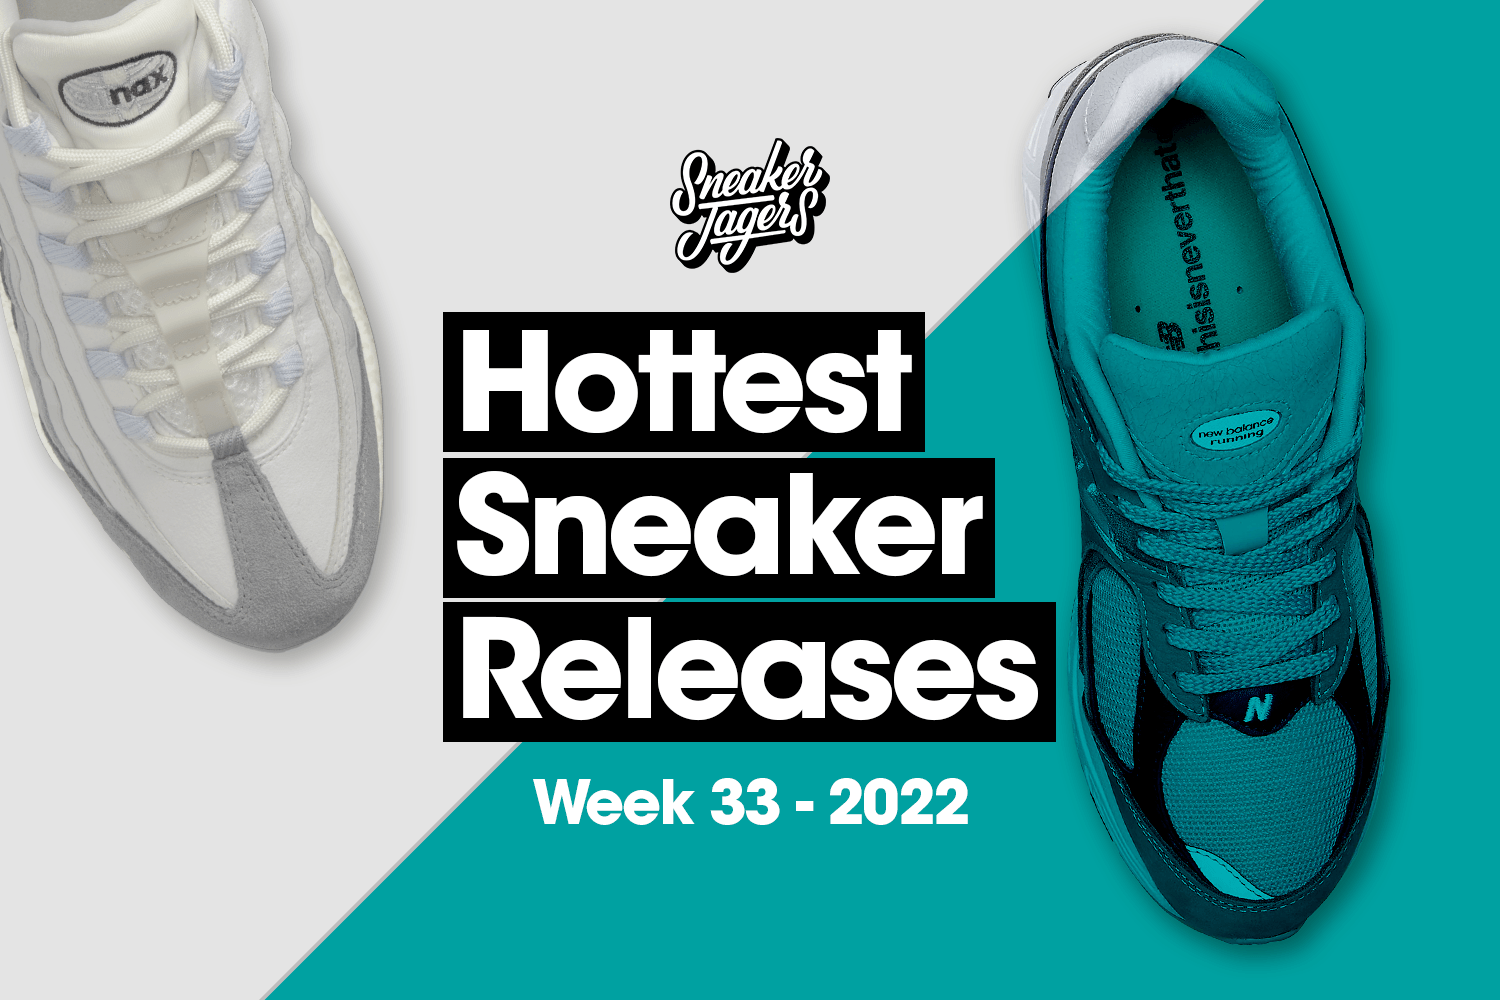 Hottest Sneaker Releases - Week 33